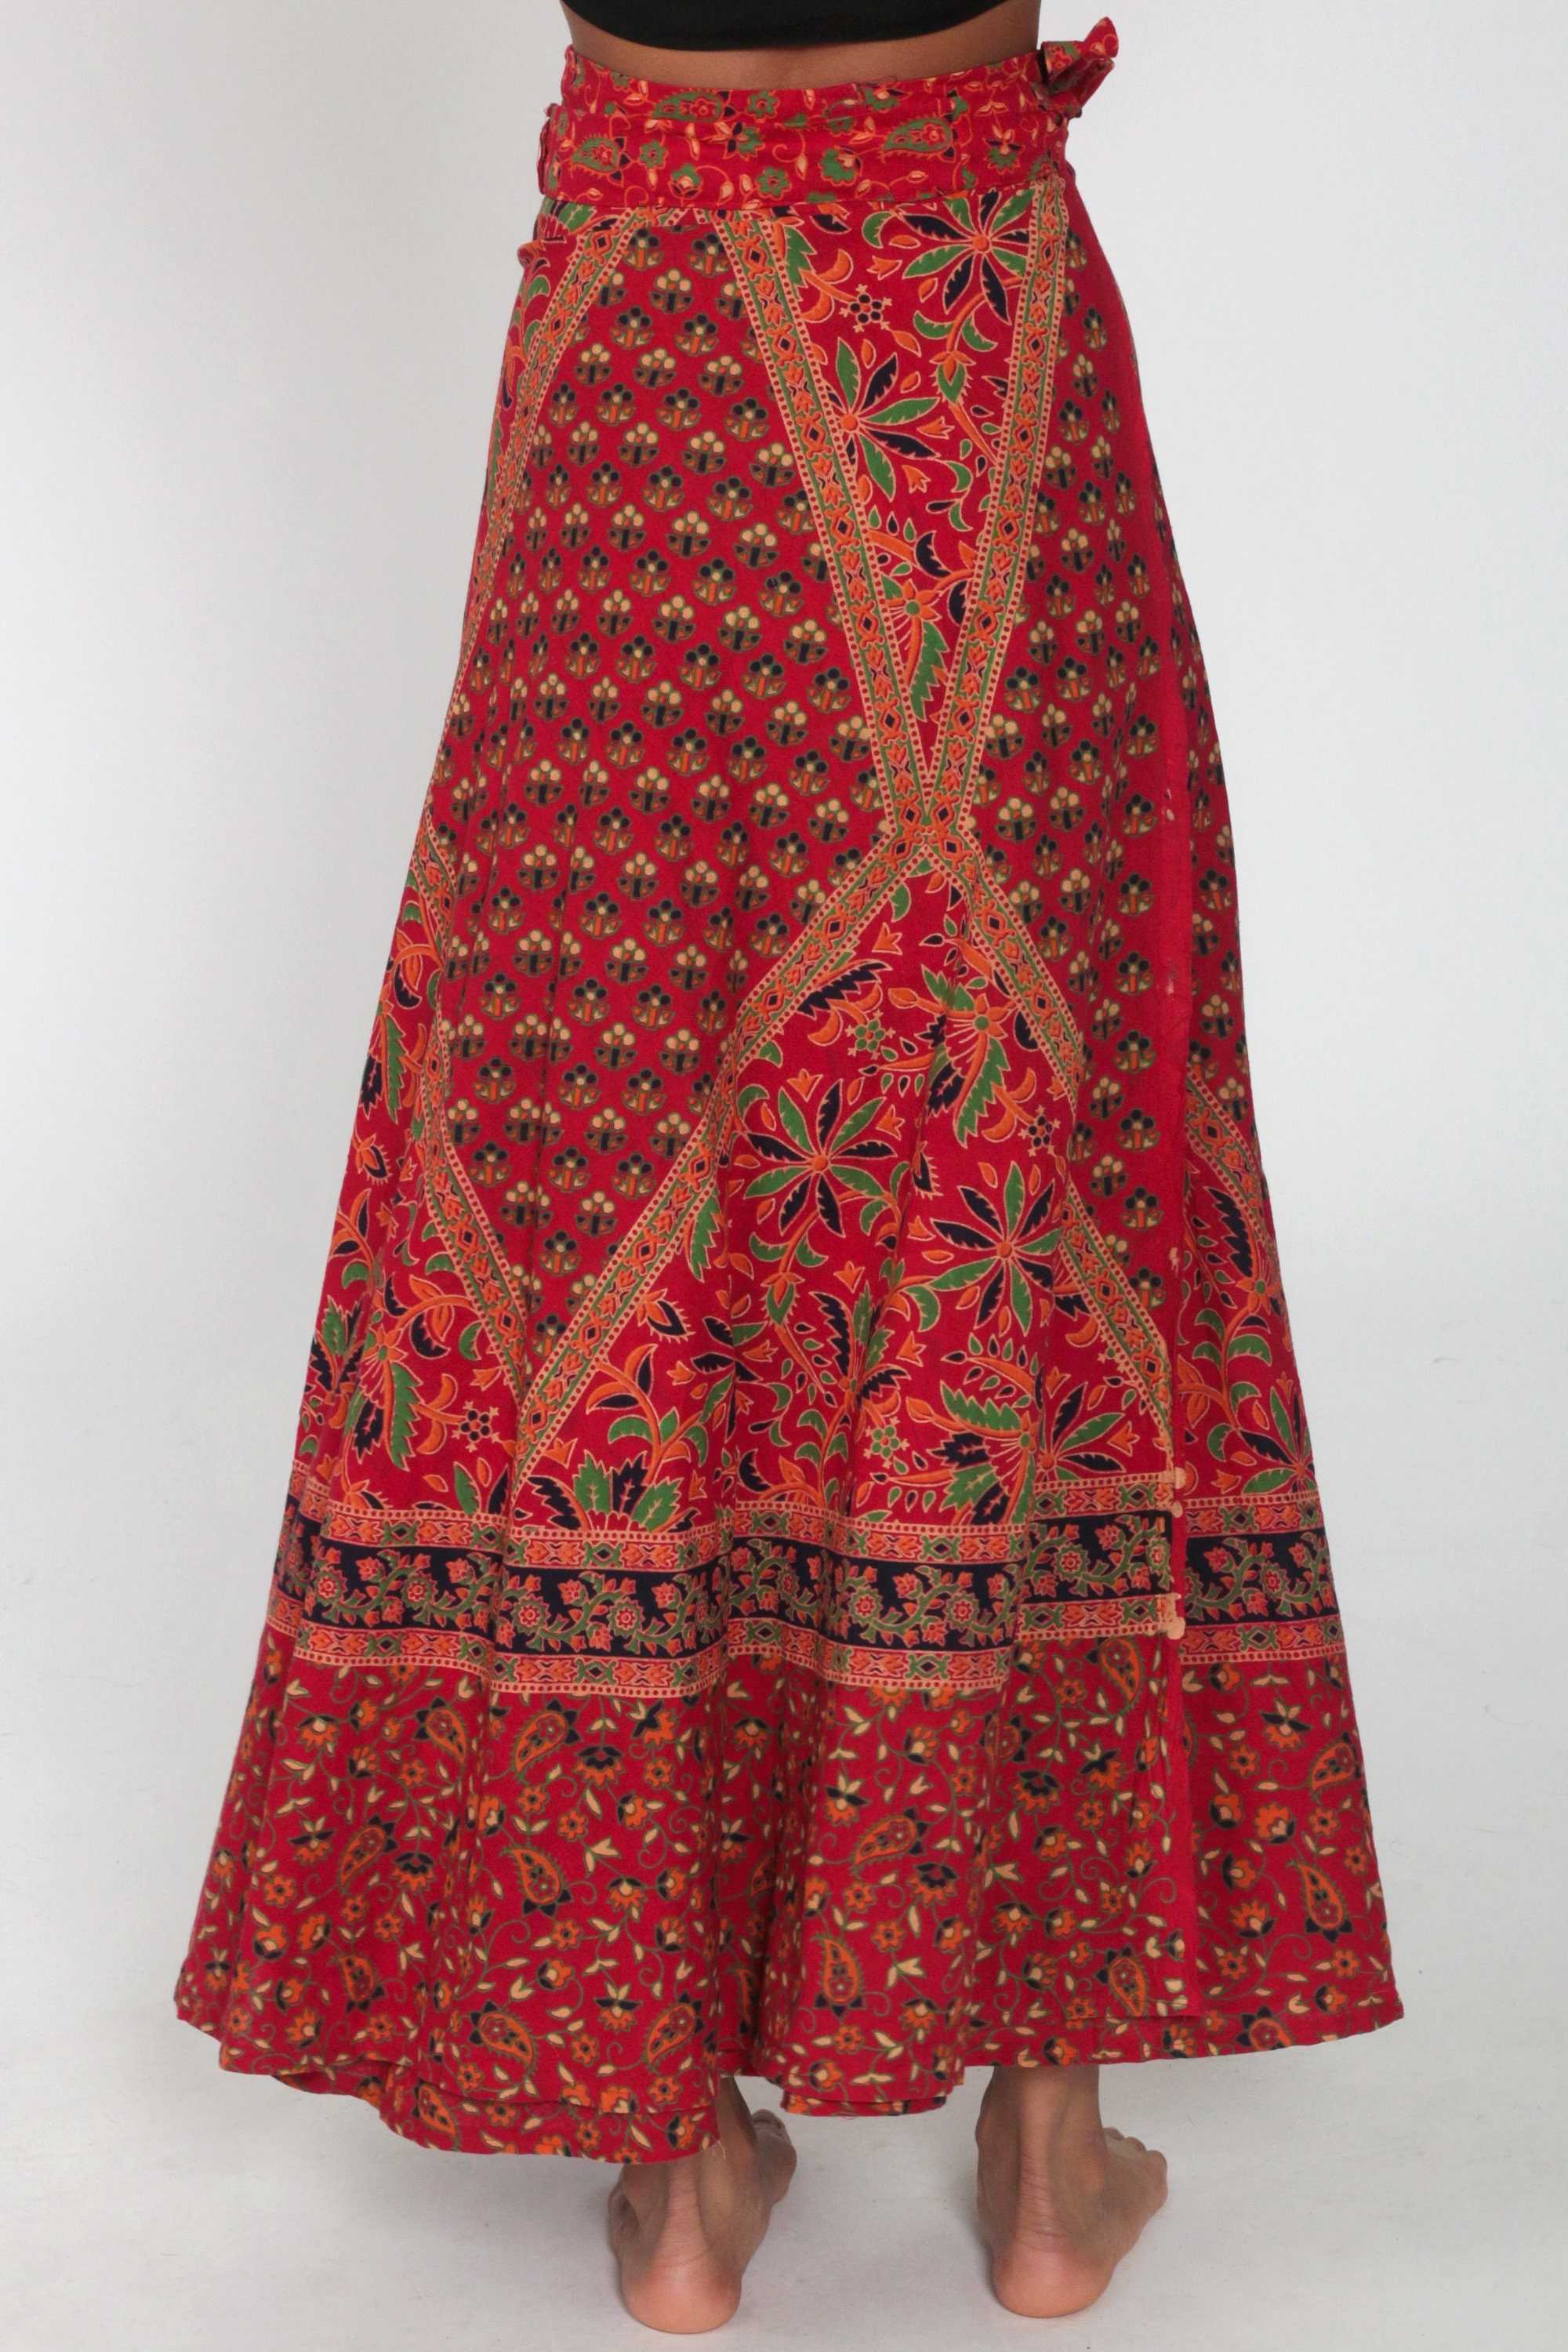 Maxi Wrap Skirt Red Indian Floral Skirt Boho Hippie Skirt 90s Bohemian ...